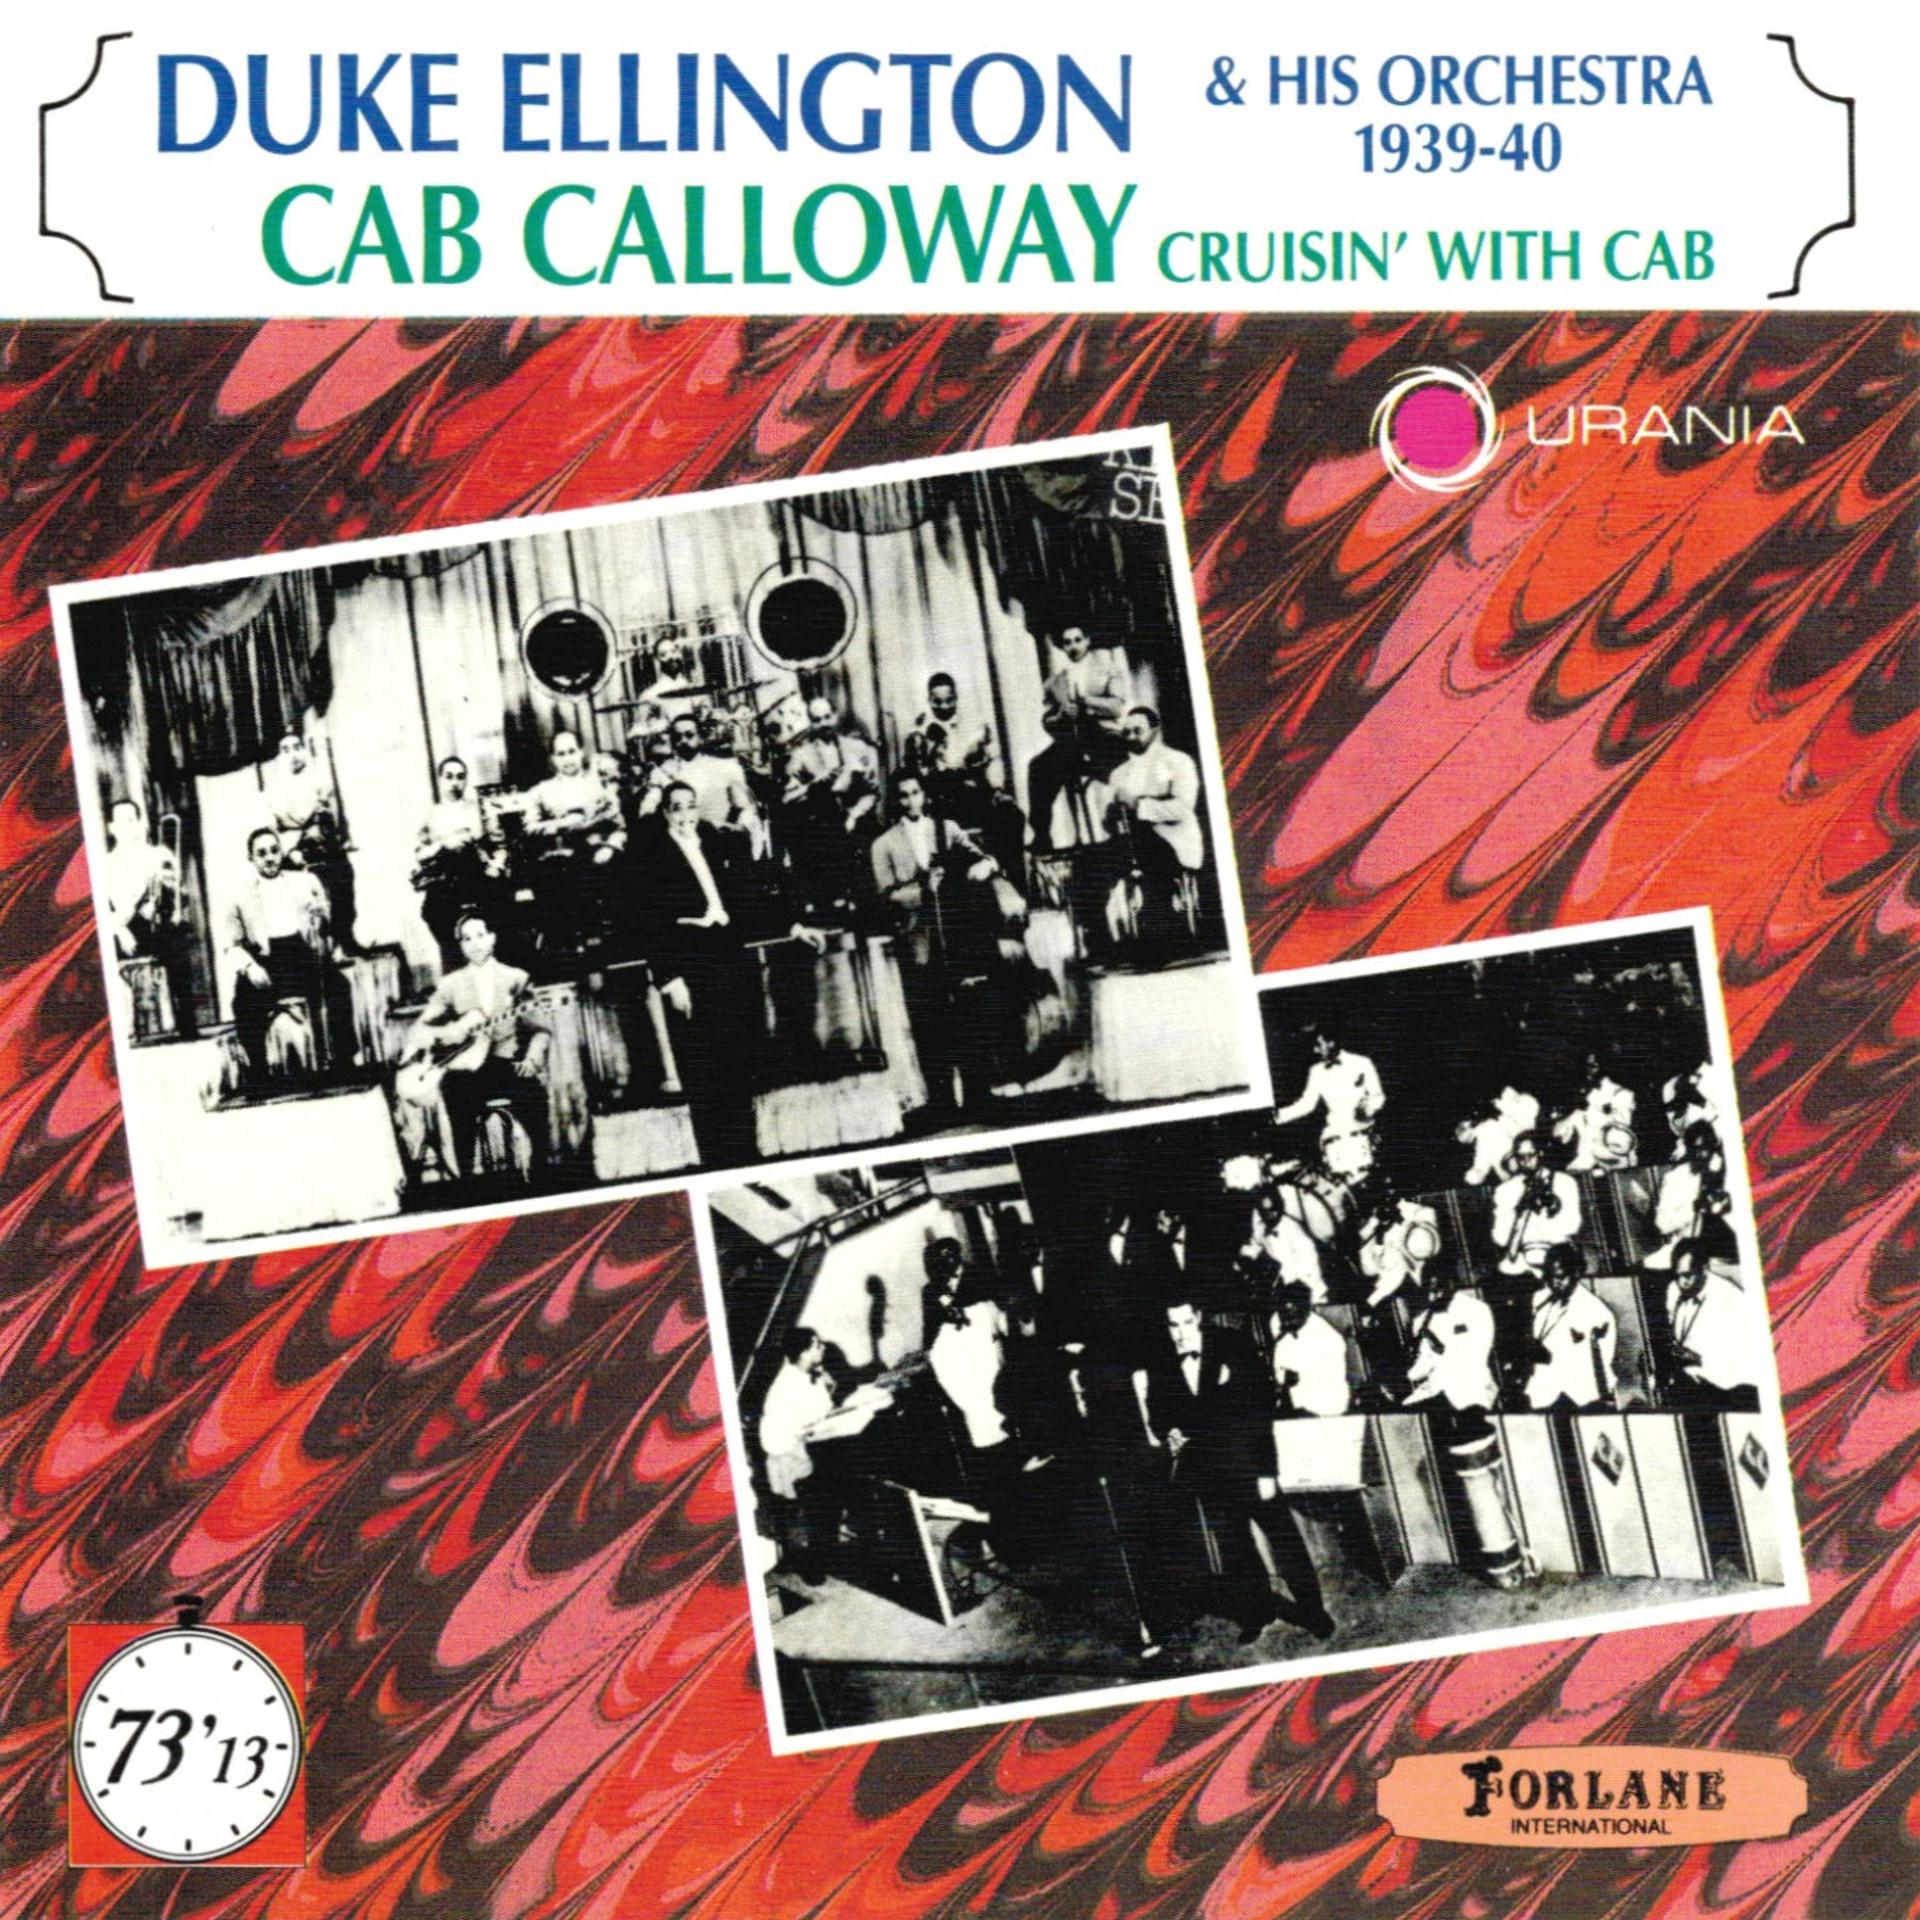 Постер альбома Duke Ellington & His Orchestra 1930-40, Cab Calloway Cruisin' With Cab